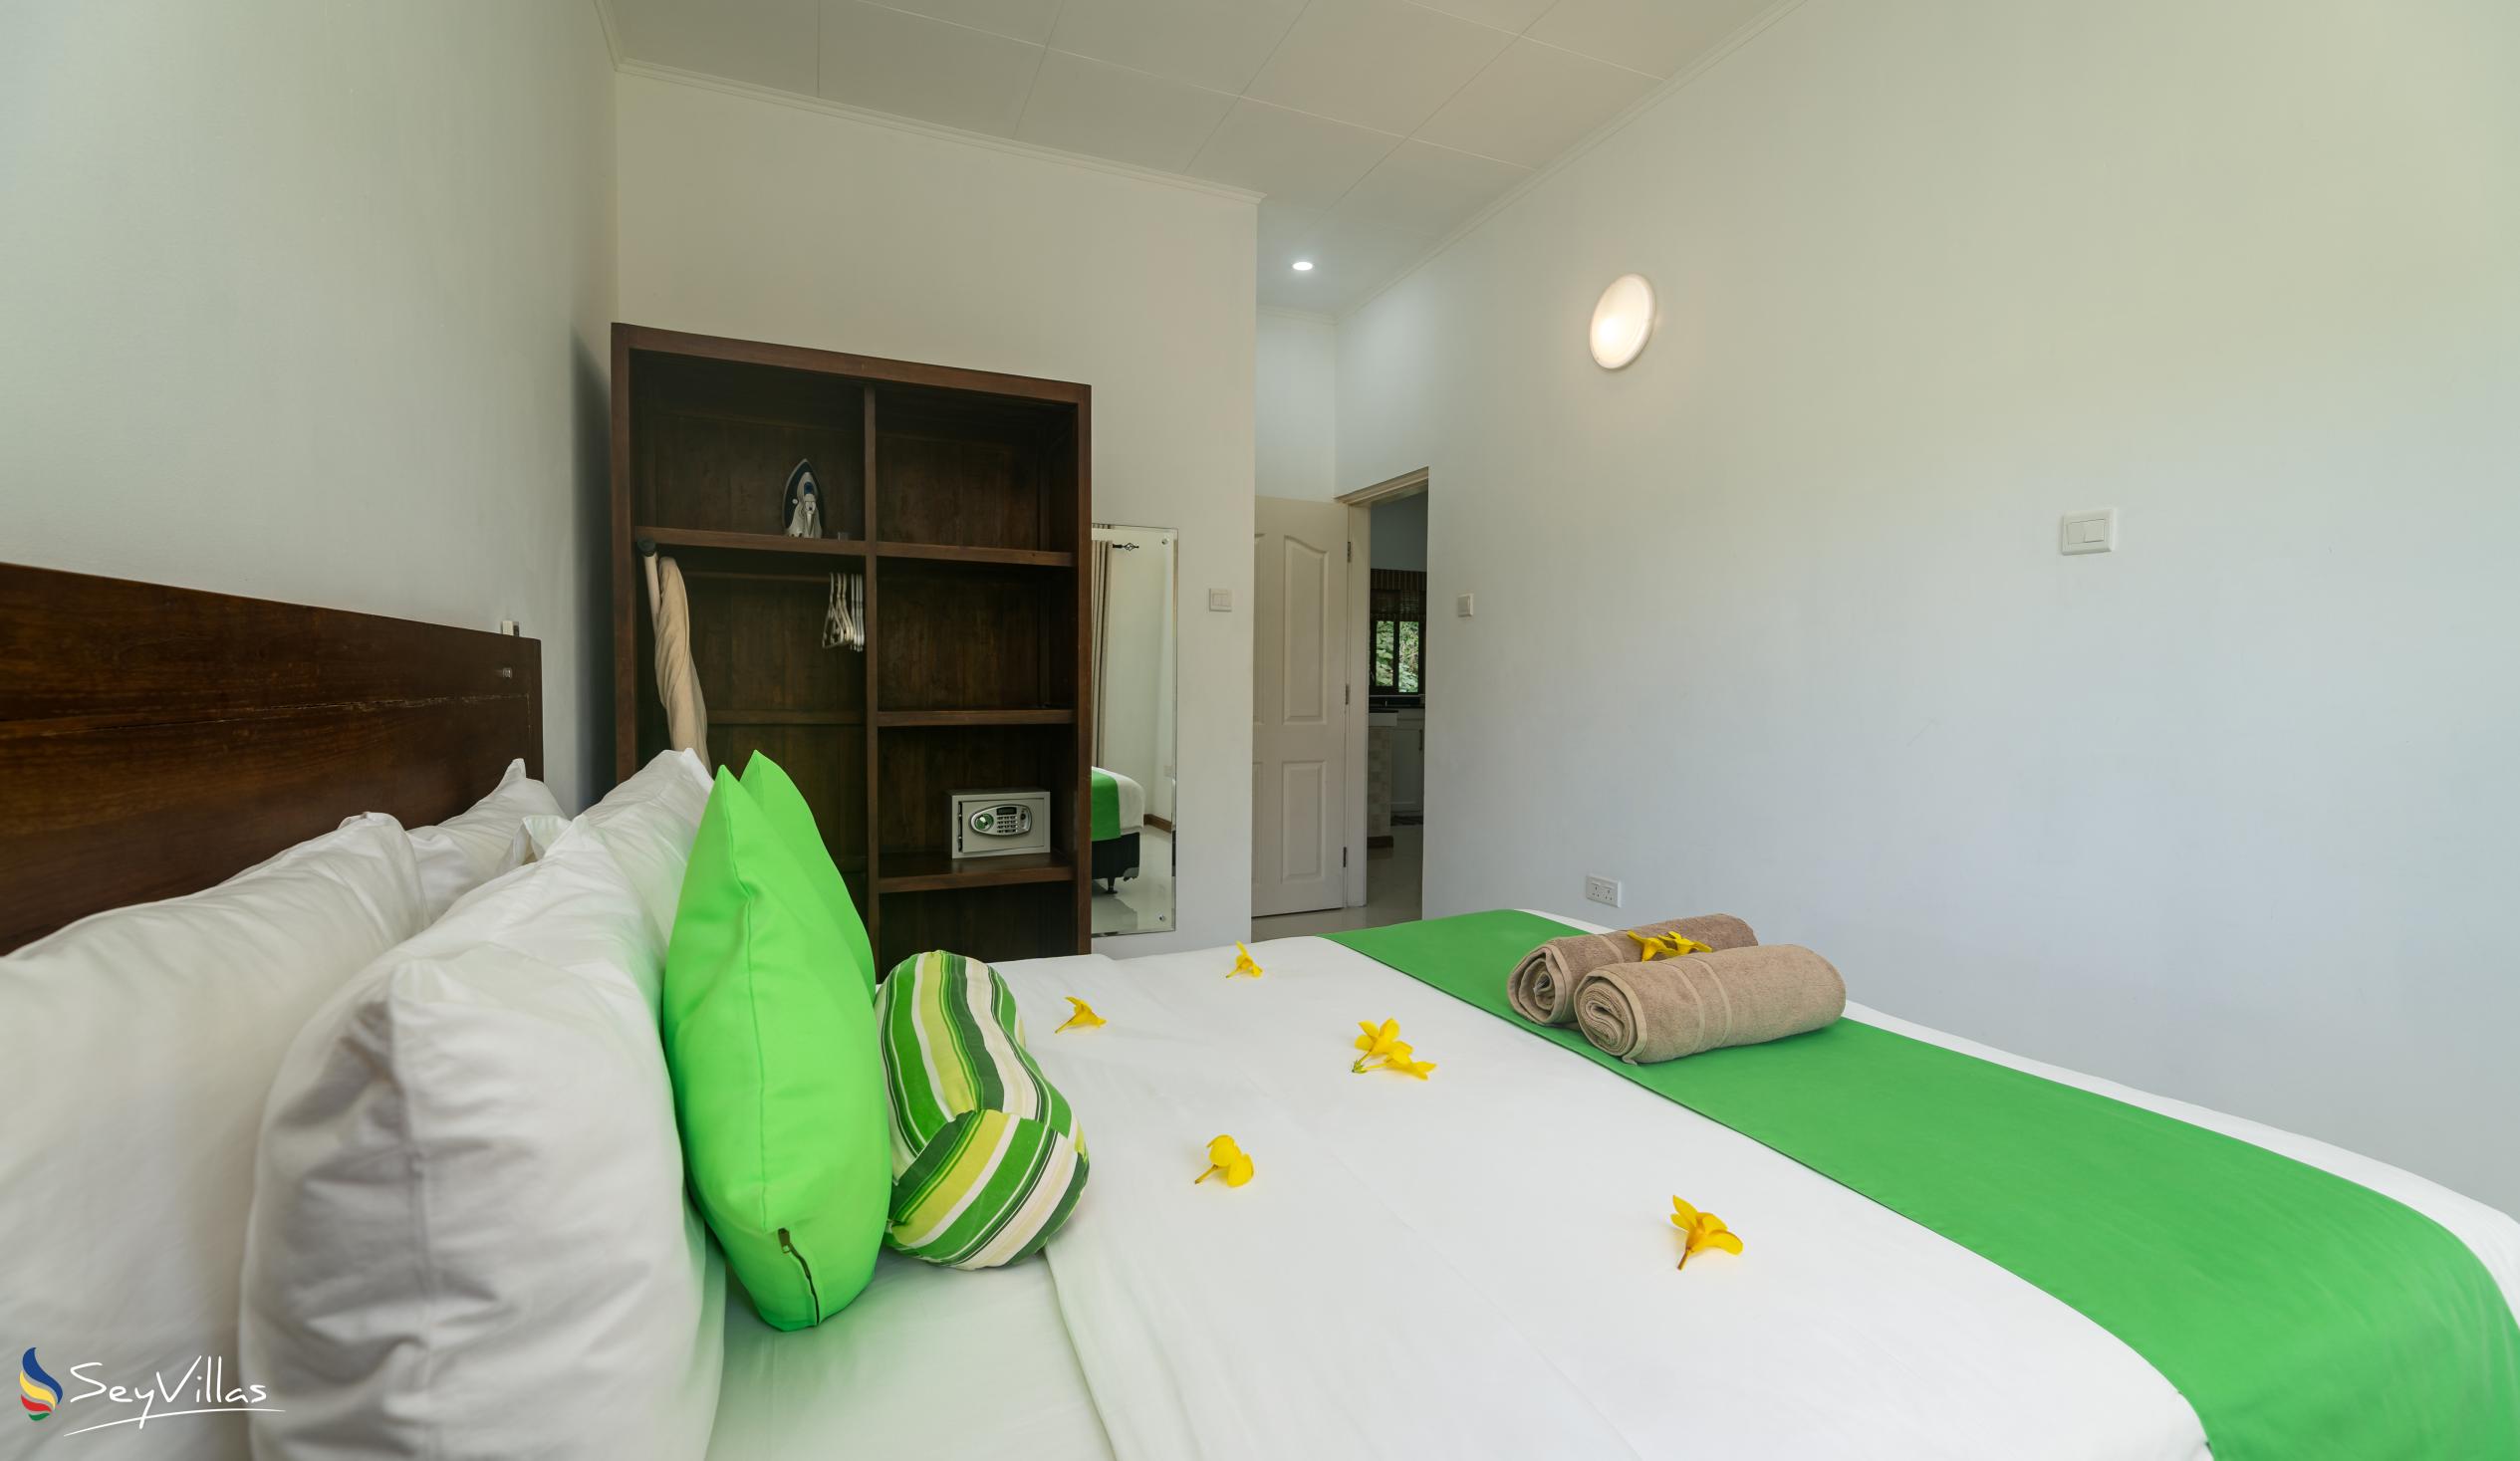 Photo 44: Kanasuk Self Catering Apartments - 2-Bedroom Apartment Lemongrass - Mahé (Seychelles)